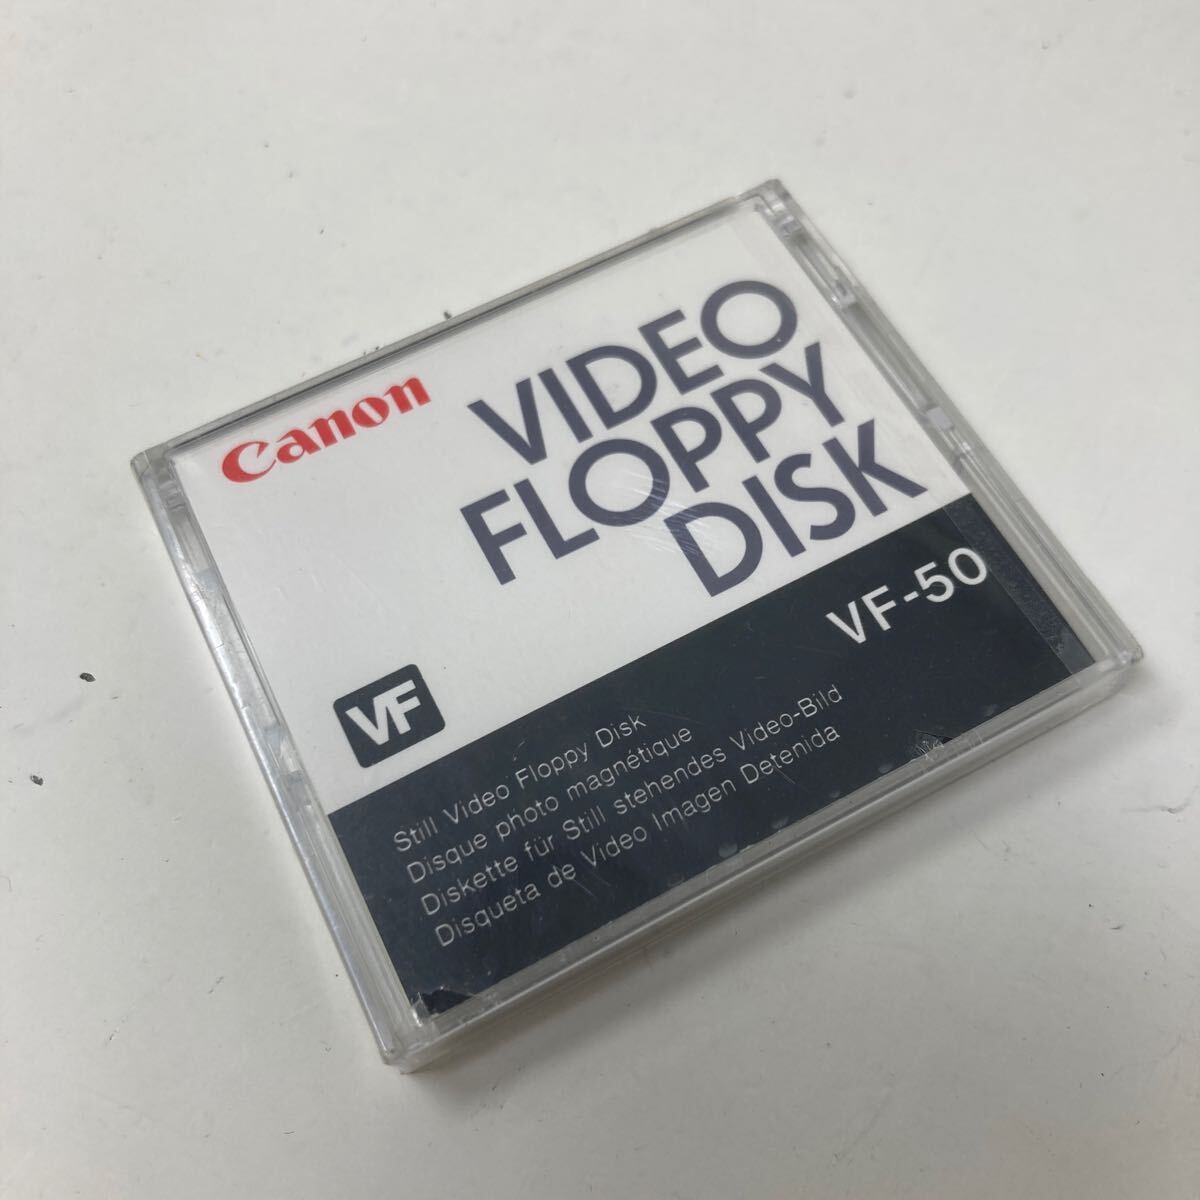  used * rare * unopened goods Canon VIDEO FLOPPY DISK video floppy disk VF-50 040419